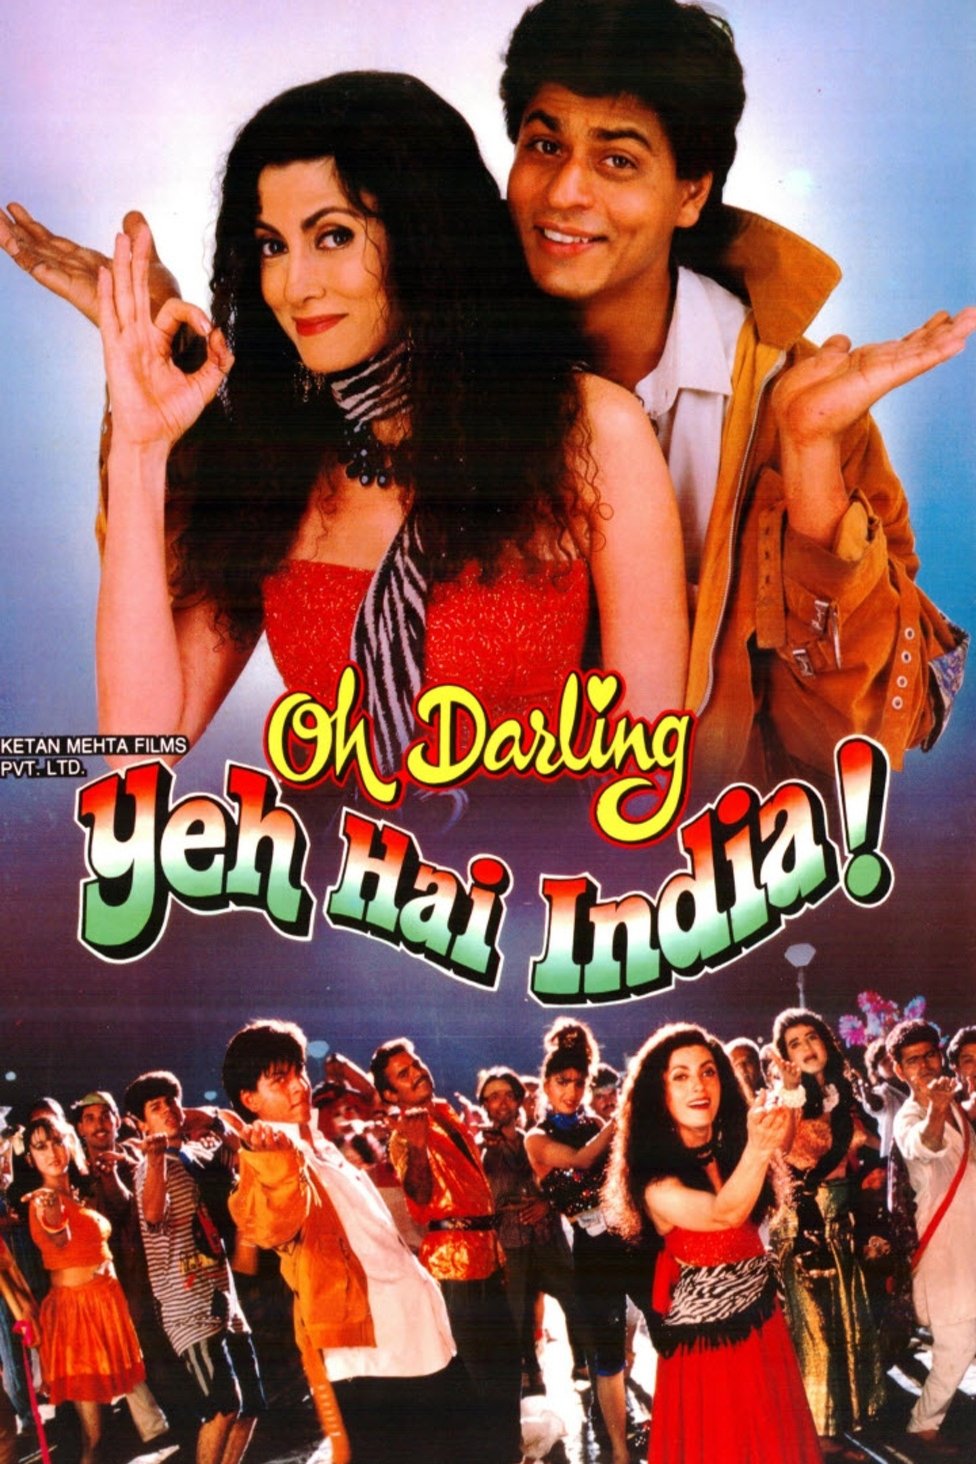 L'affiche originale du film Oh Darling Yeh Hai India en Hindi